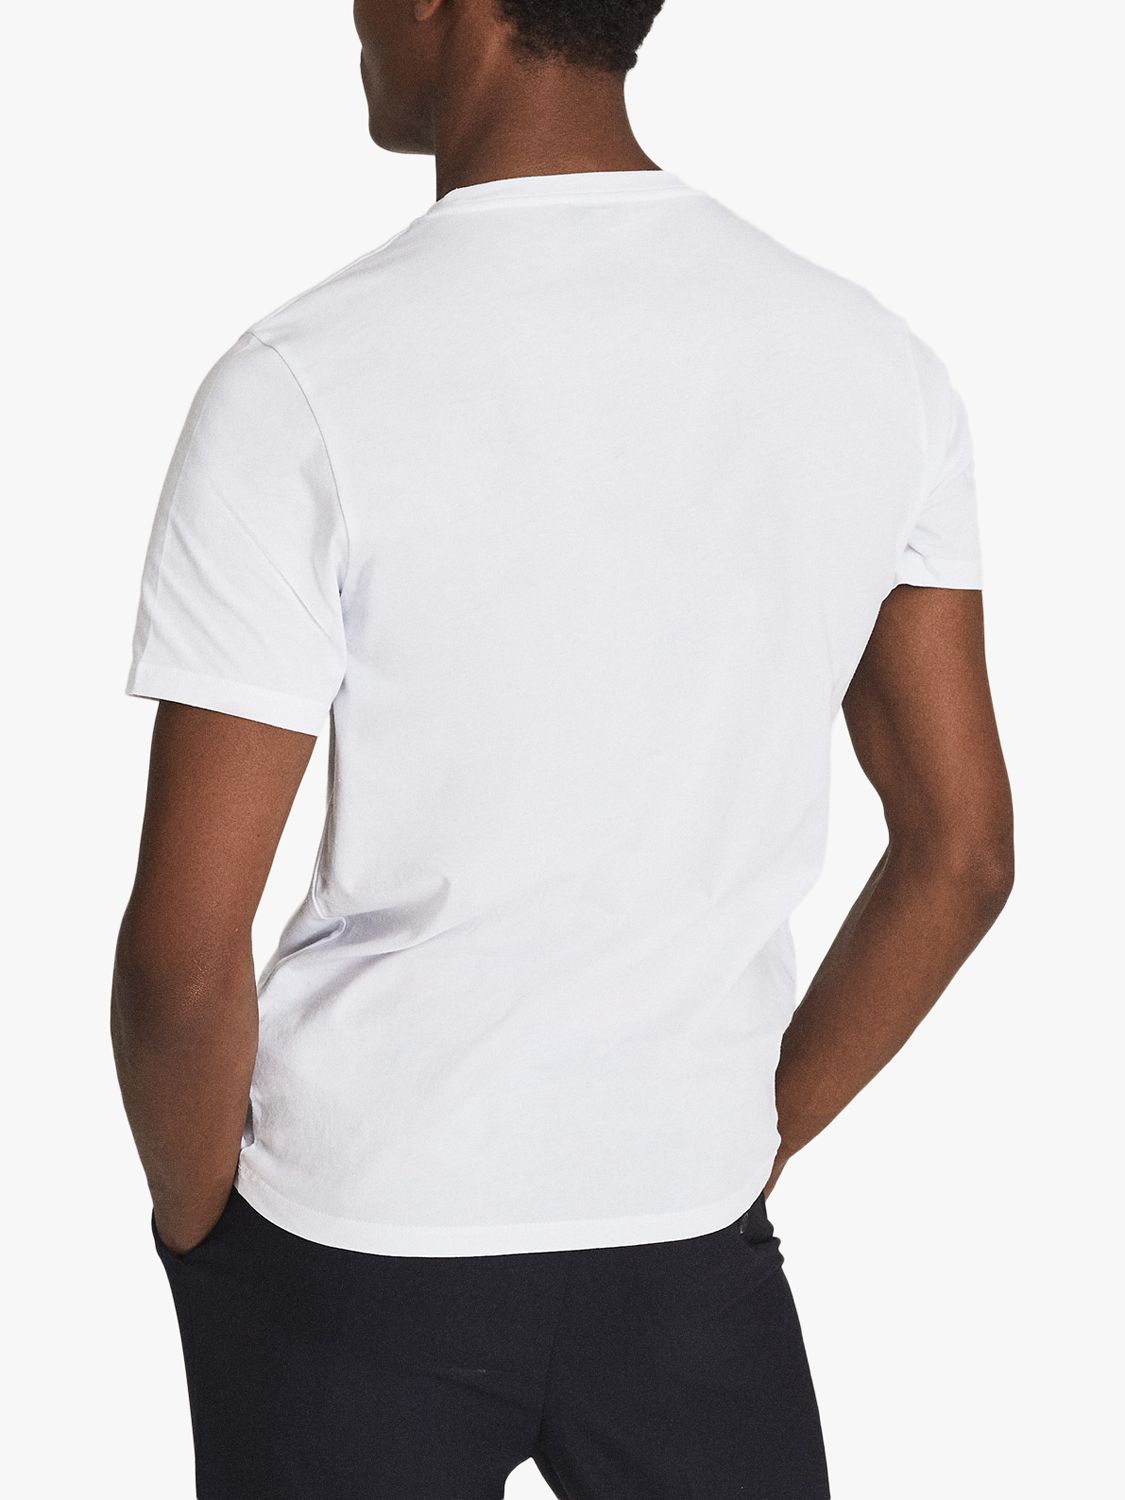 Reiss Bless Crew Neck T-Shirt, White at John Lewis & Partners